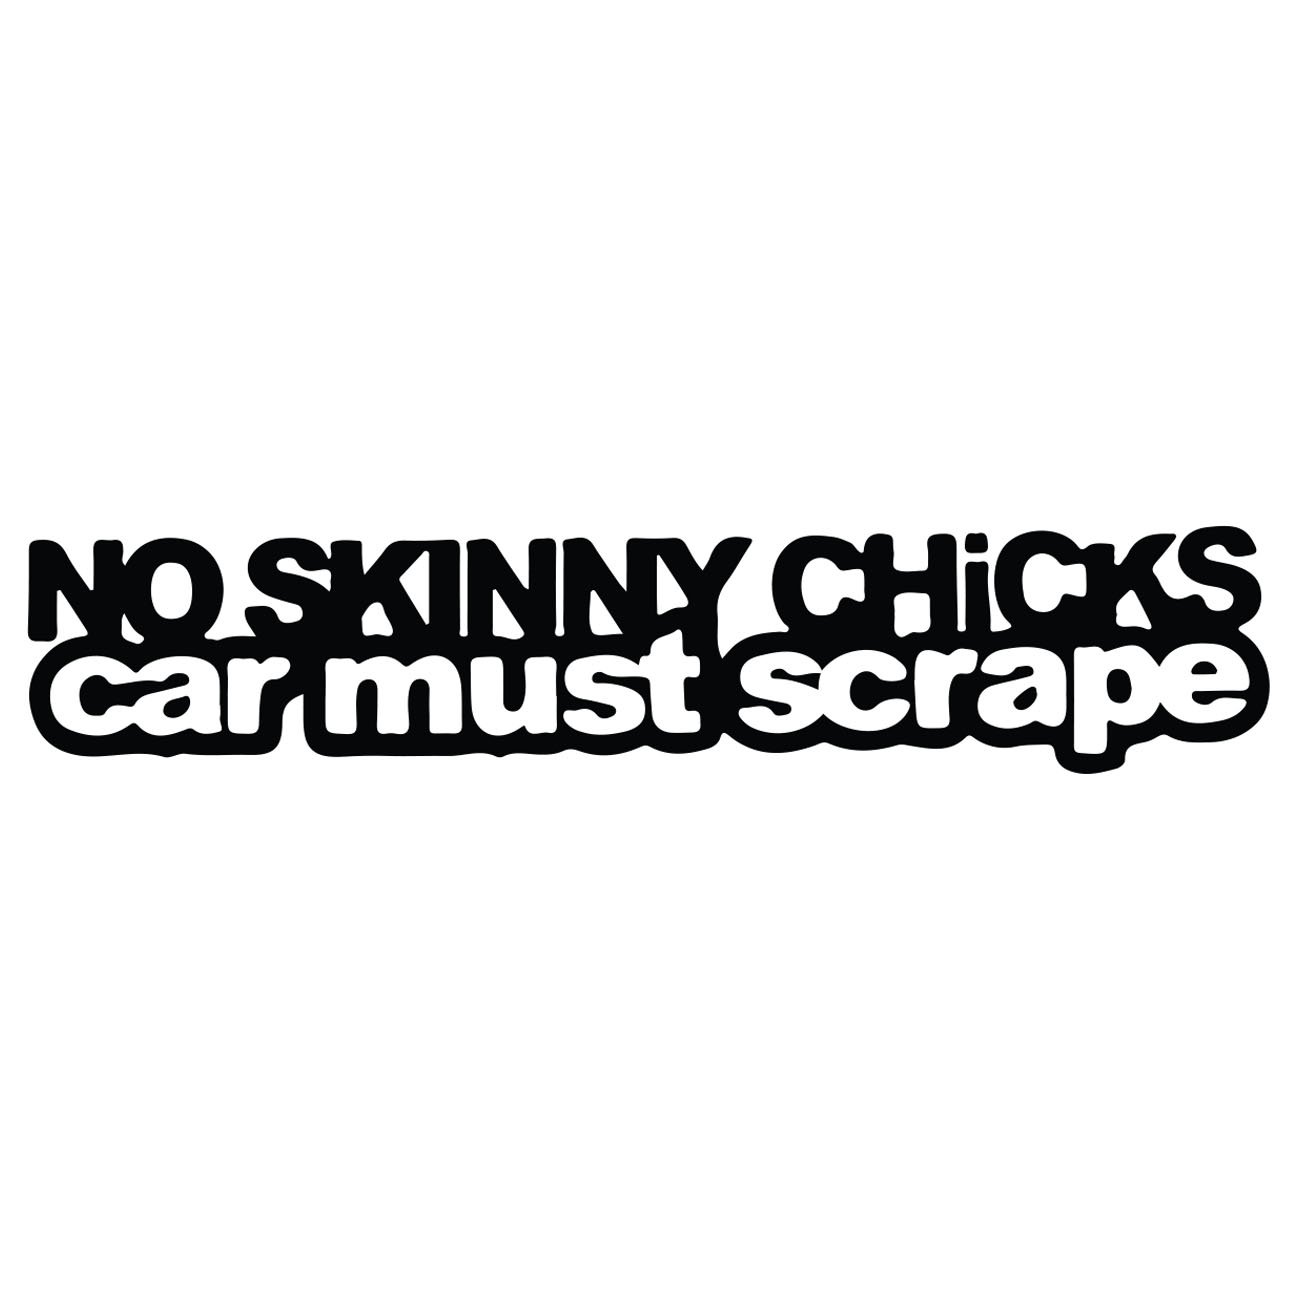 No skinny chicks - Car must scrape